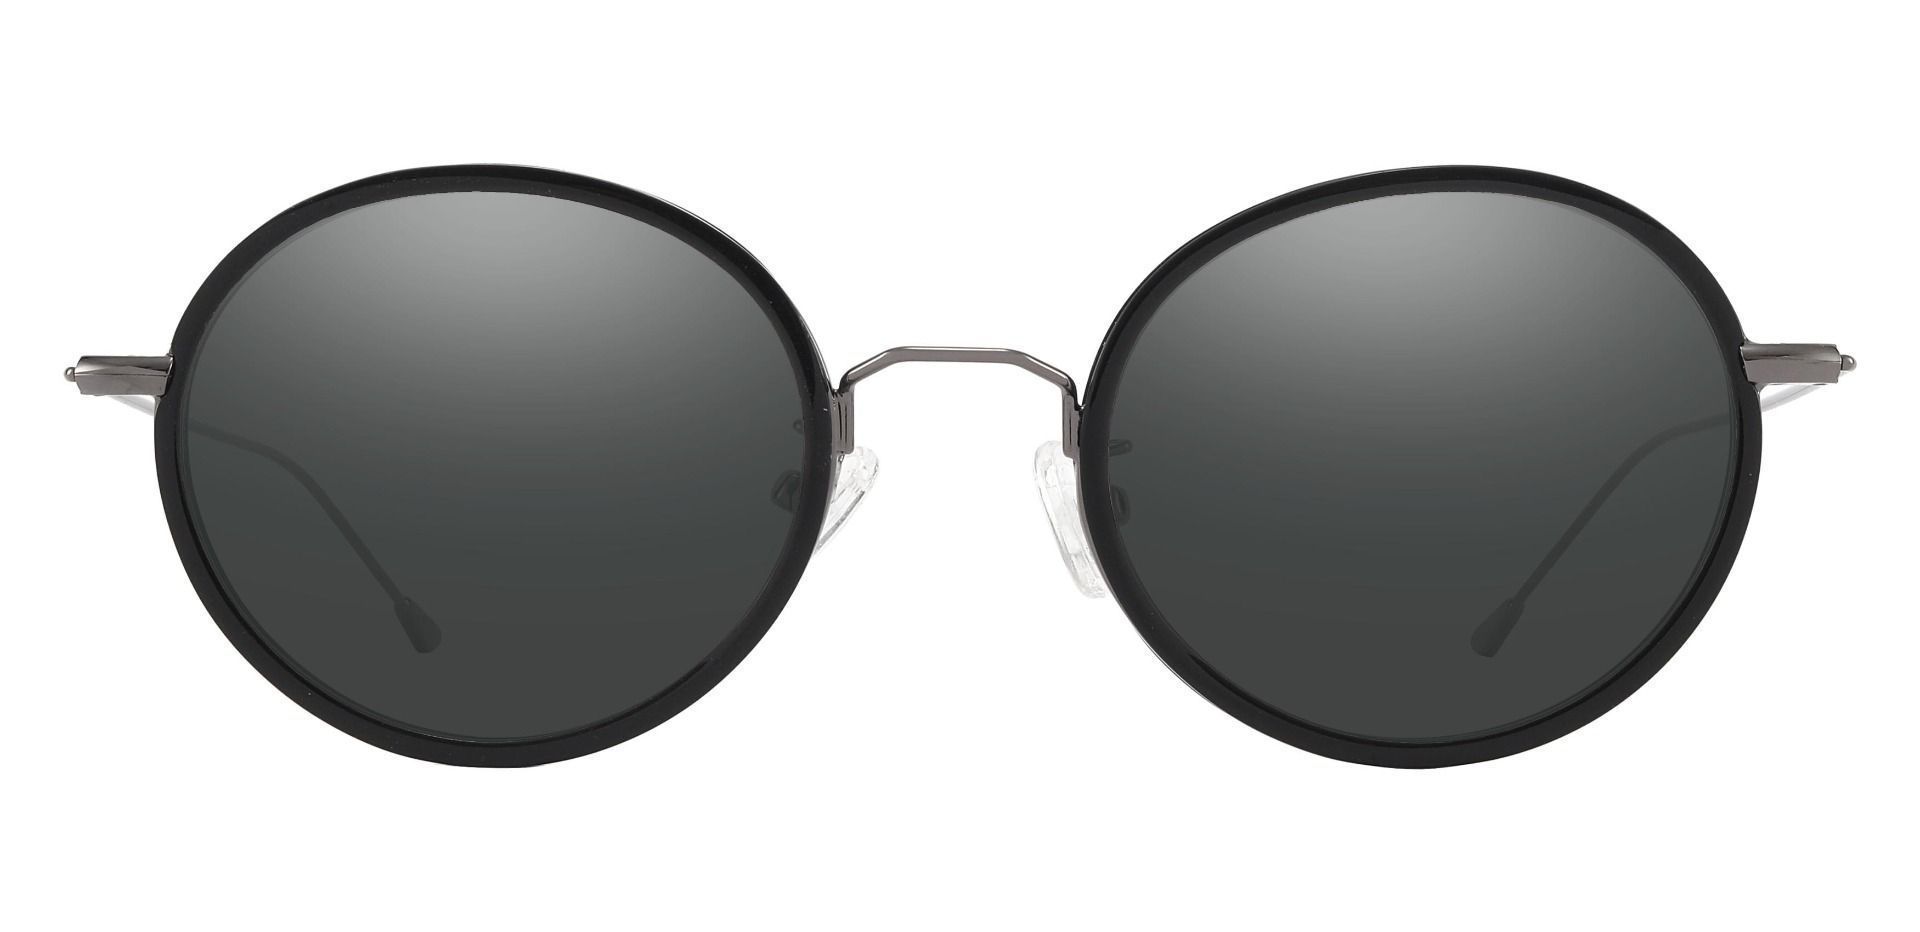 Malverne Oval Lined Bifocal Sunglasses - Black Frame With Gray Lenses